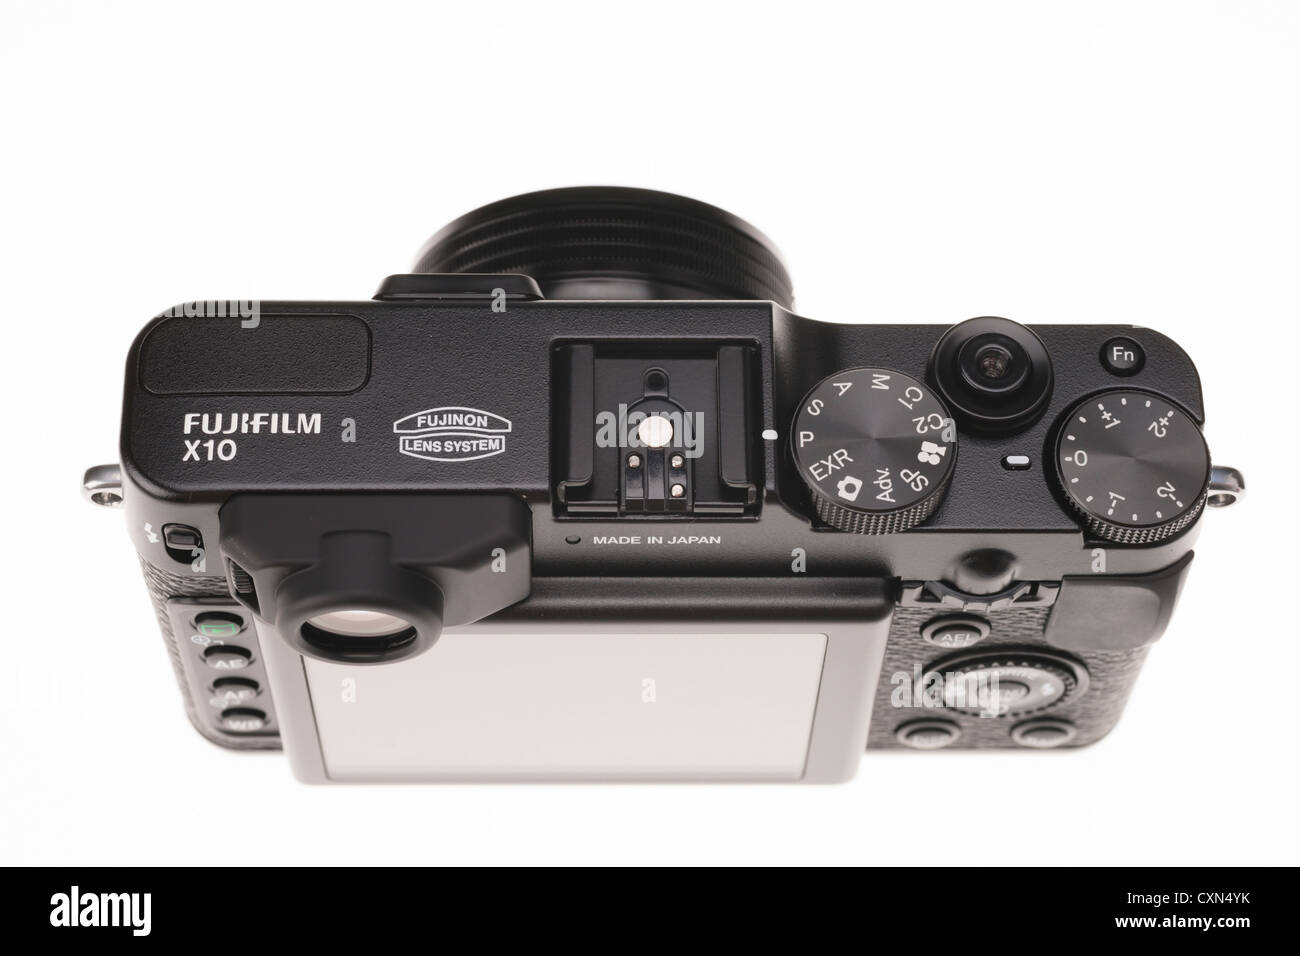 Fuji Finepix X10 digital camera Stock Photo - Alamy